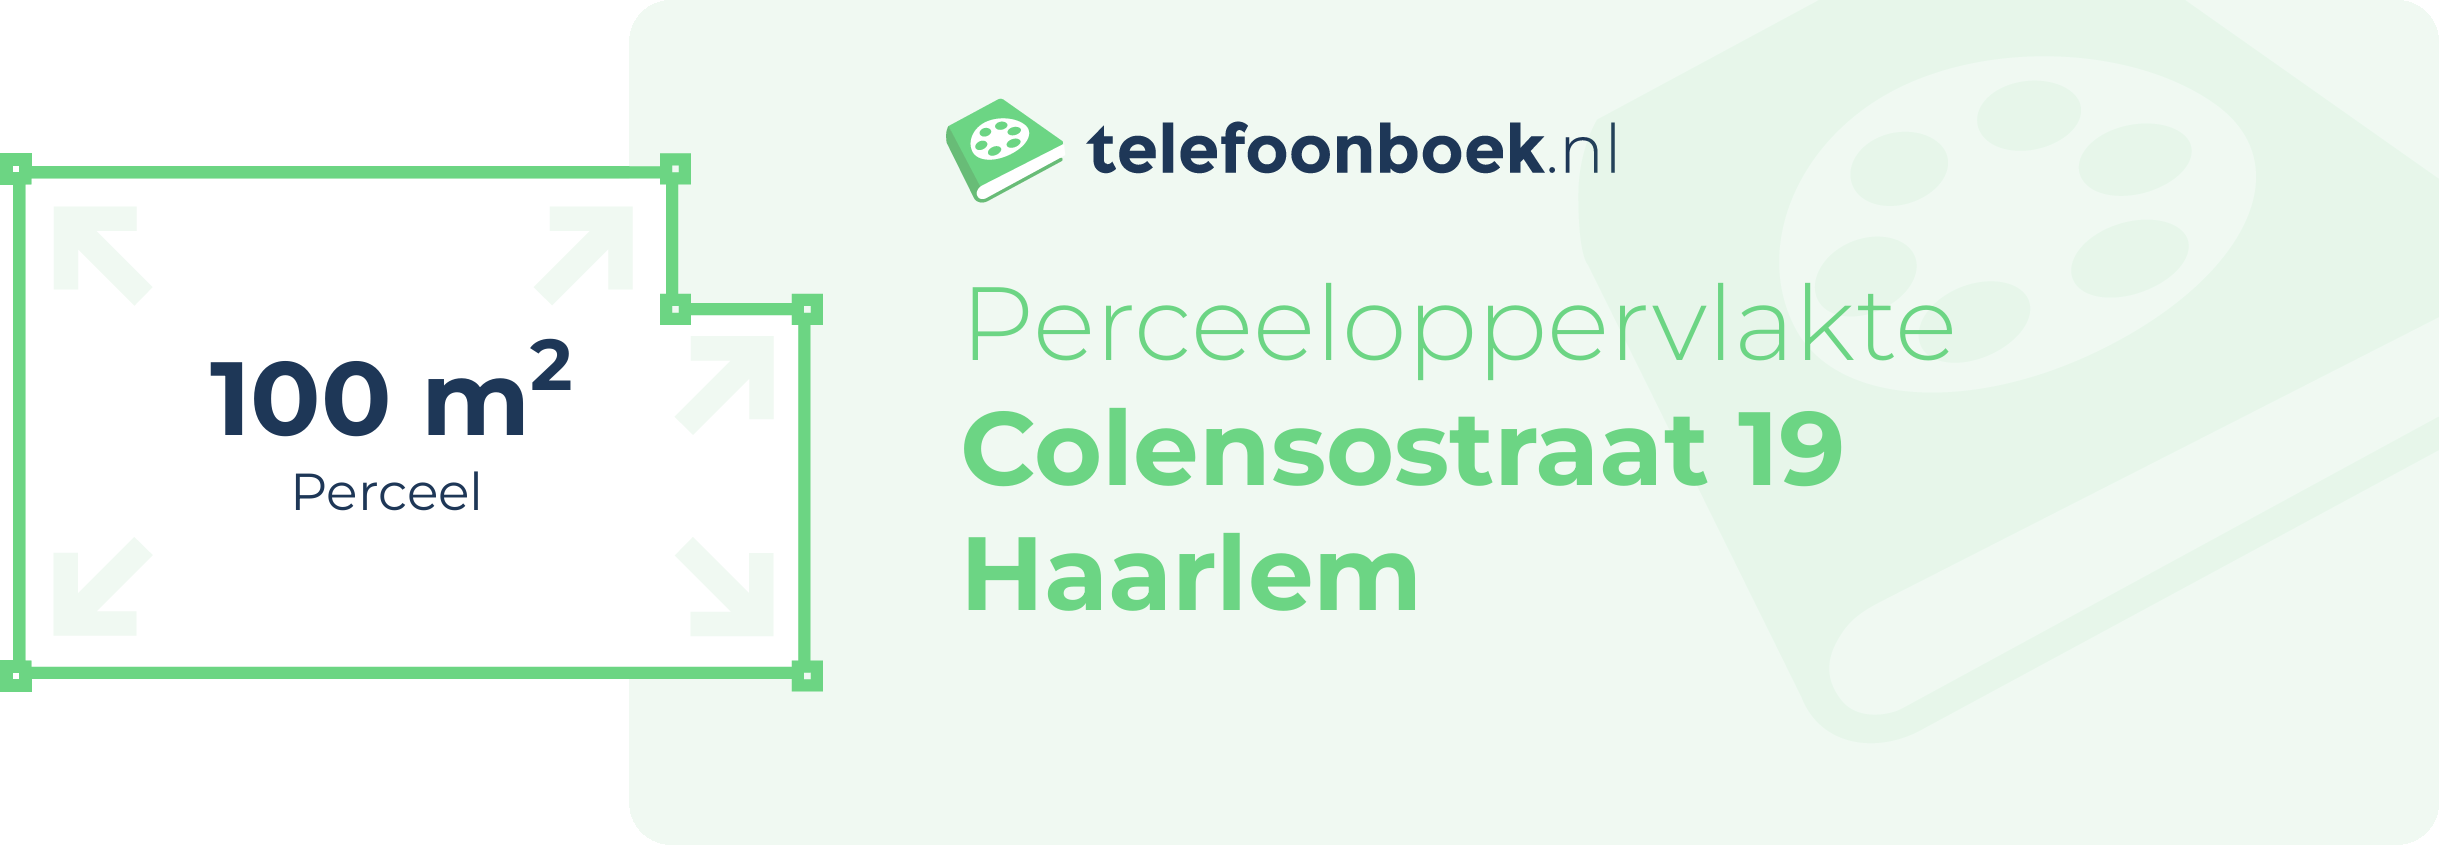 Perceeloppervlakte Colensostraat 19 Haarlem